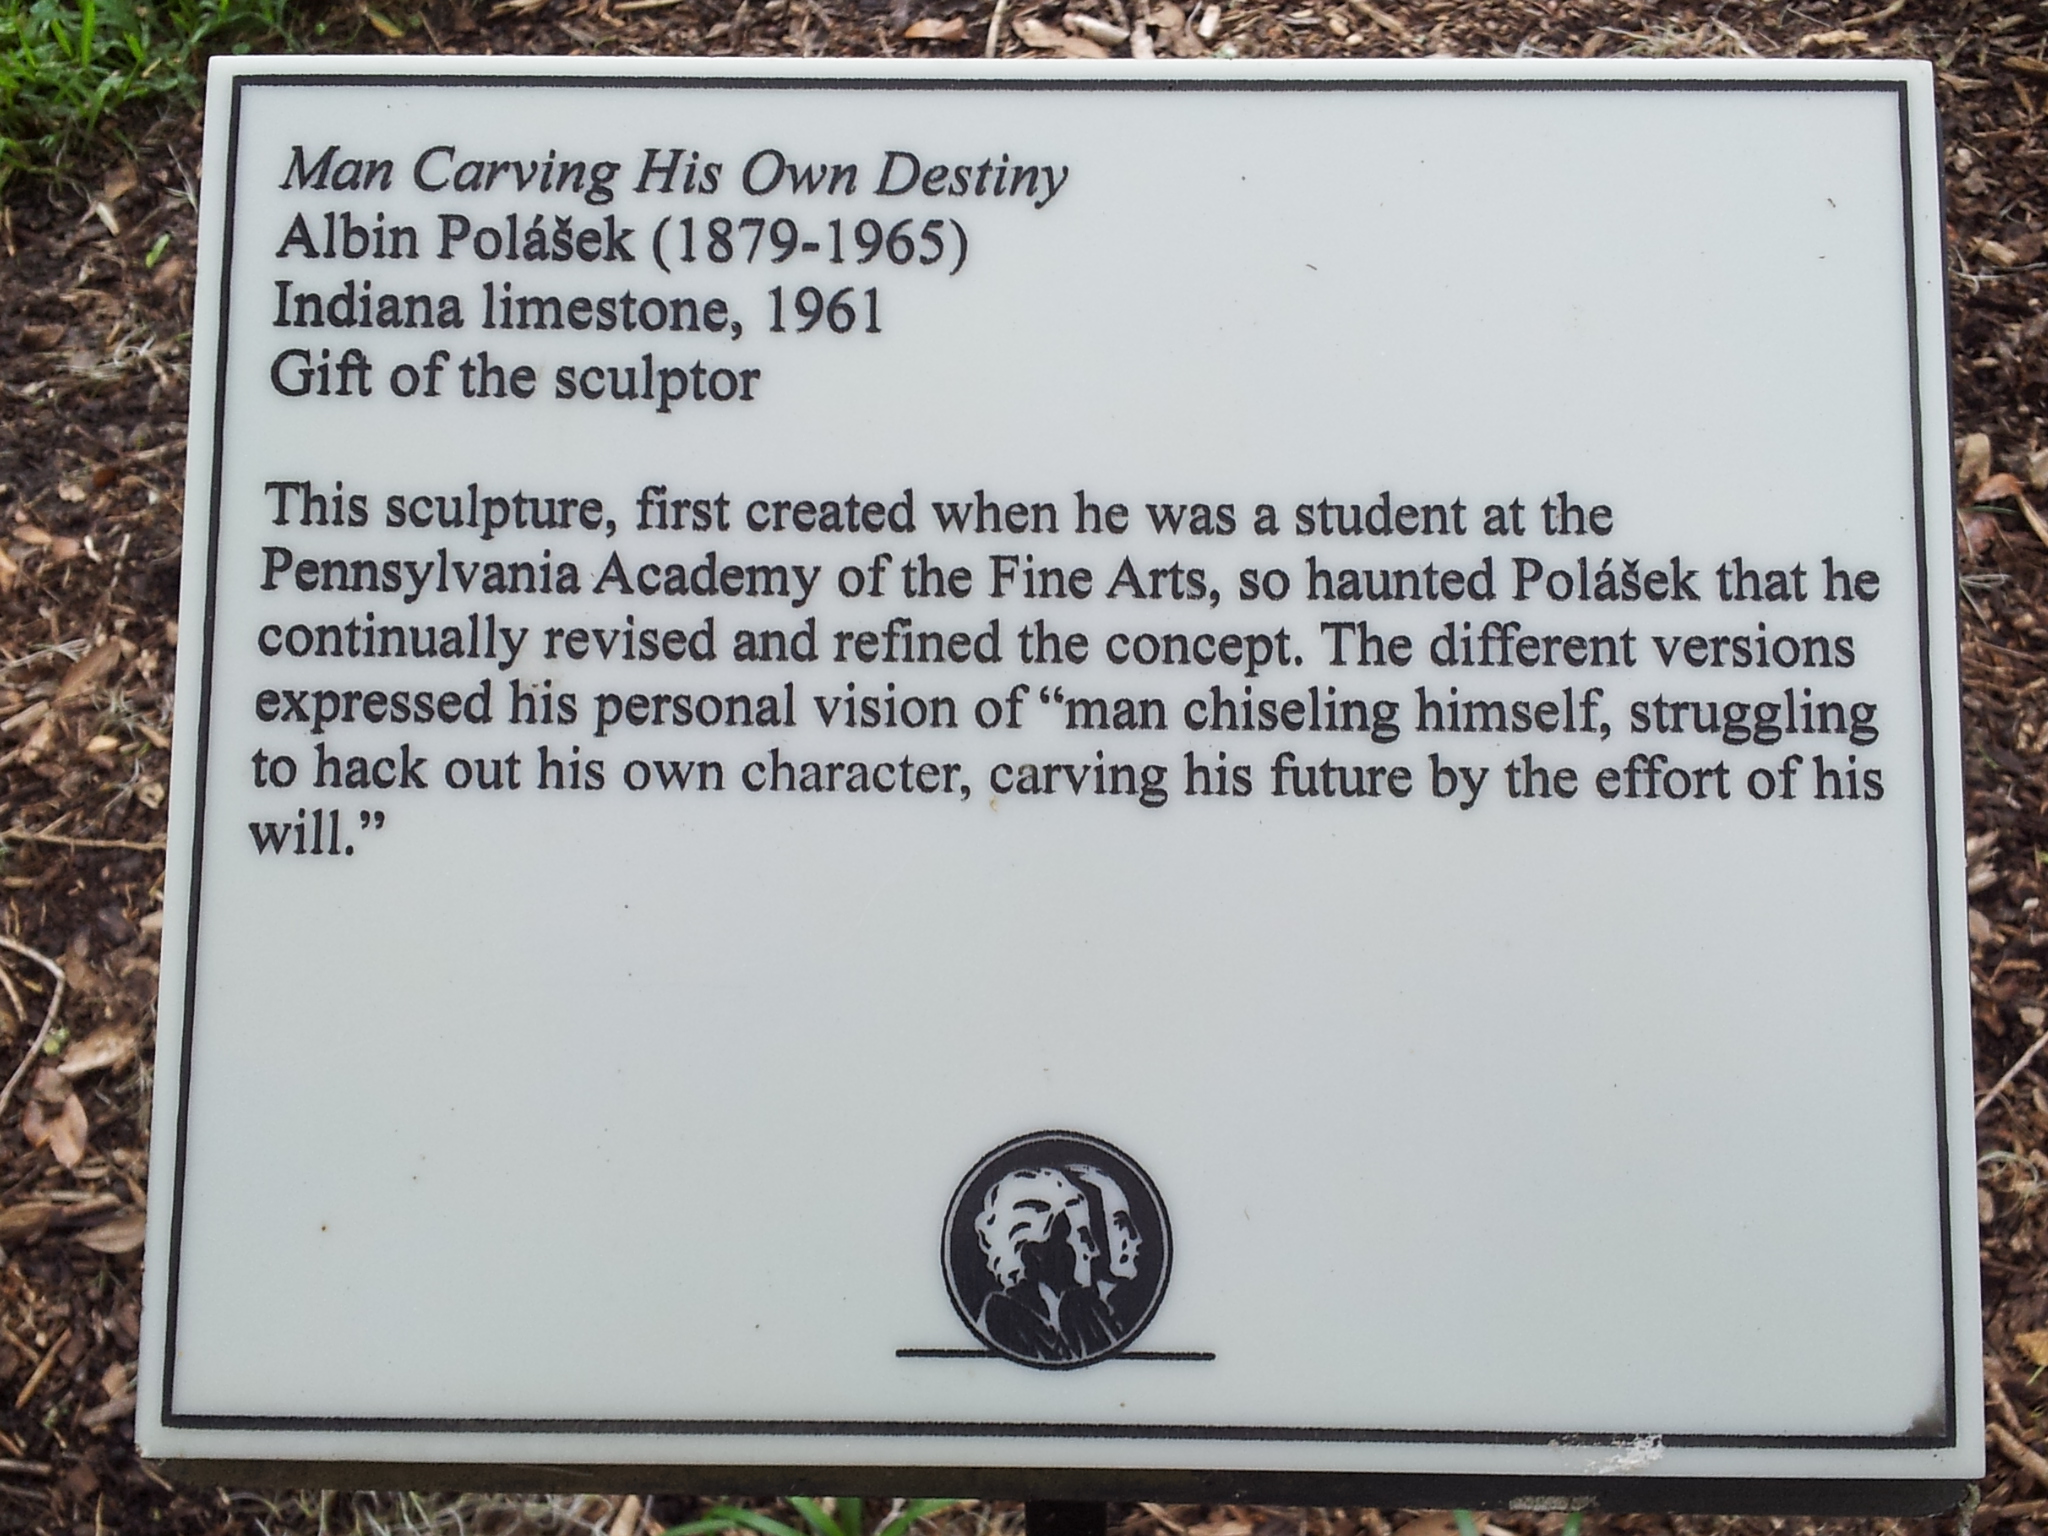 Man Carving His Own Destiny by Albin Polasek (plaque)